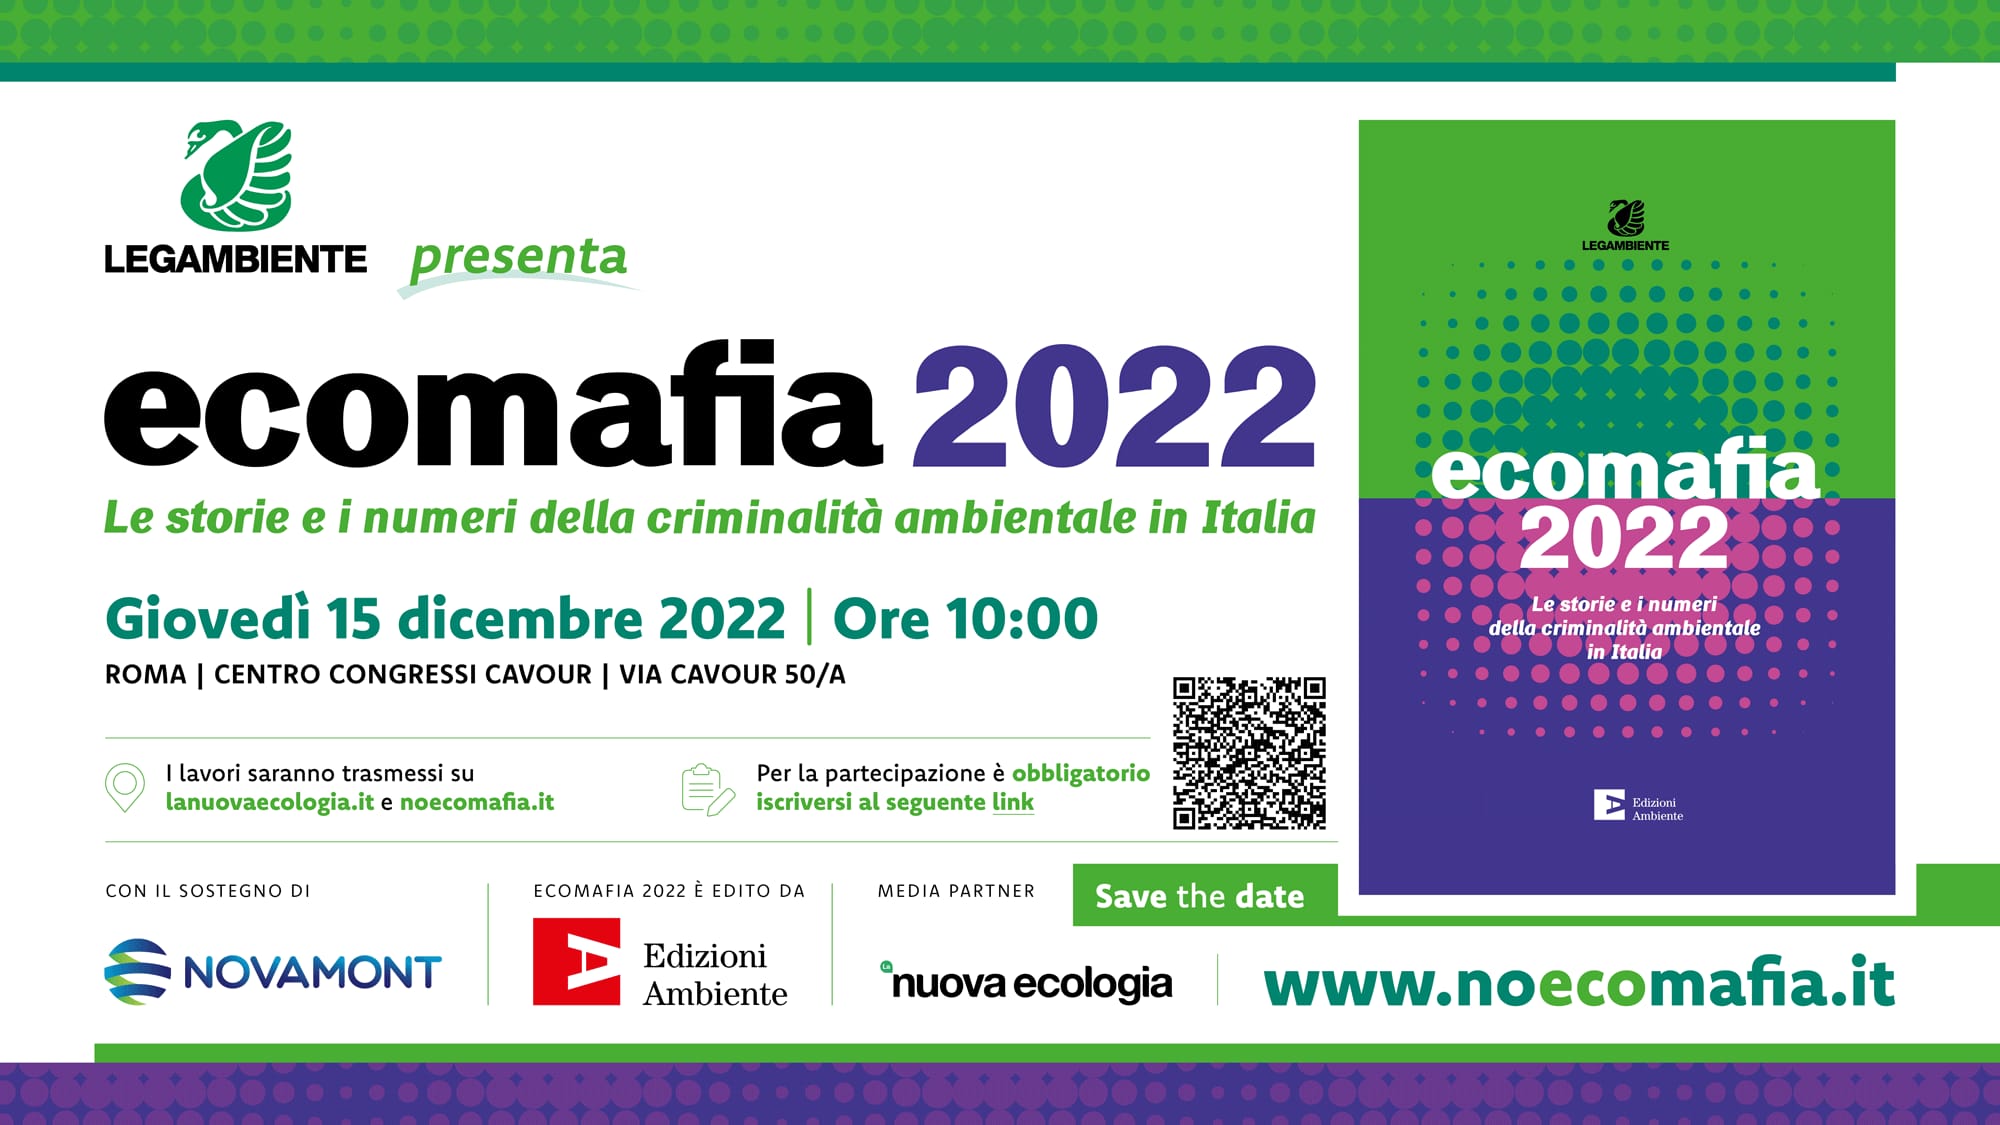 Ecomafia 2022